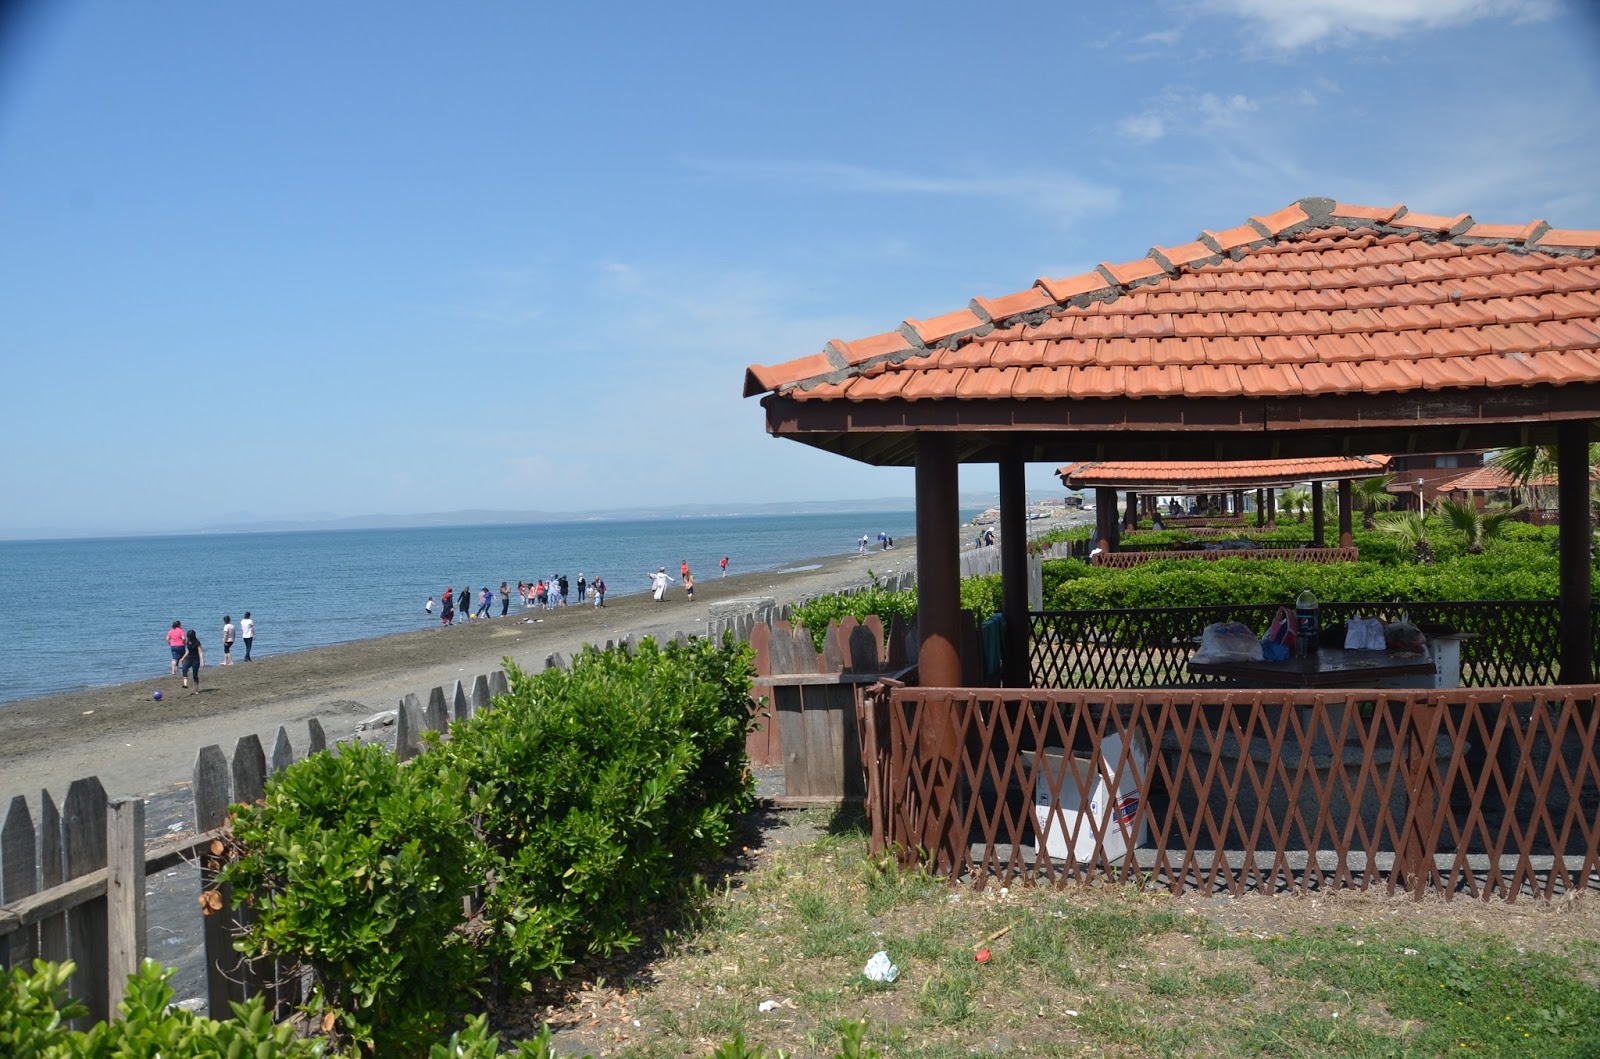 Foto av Yeniyurt beach med turkosa vatten yta